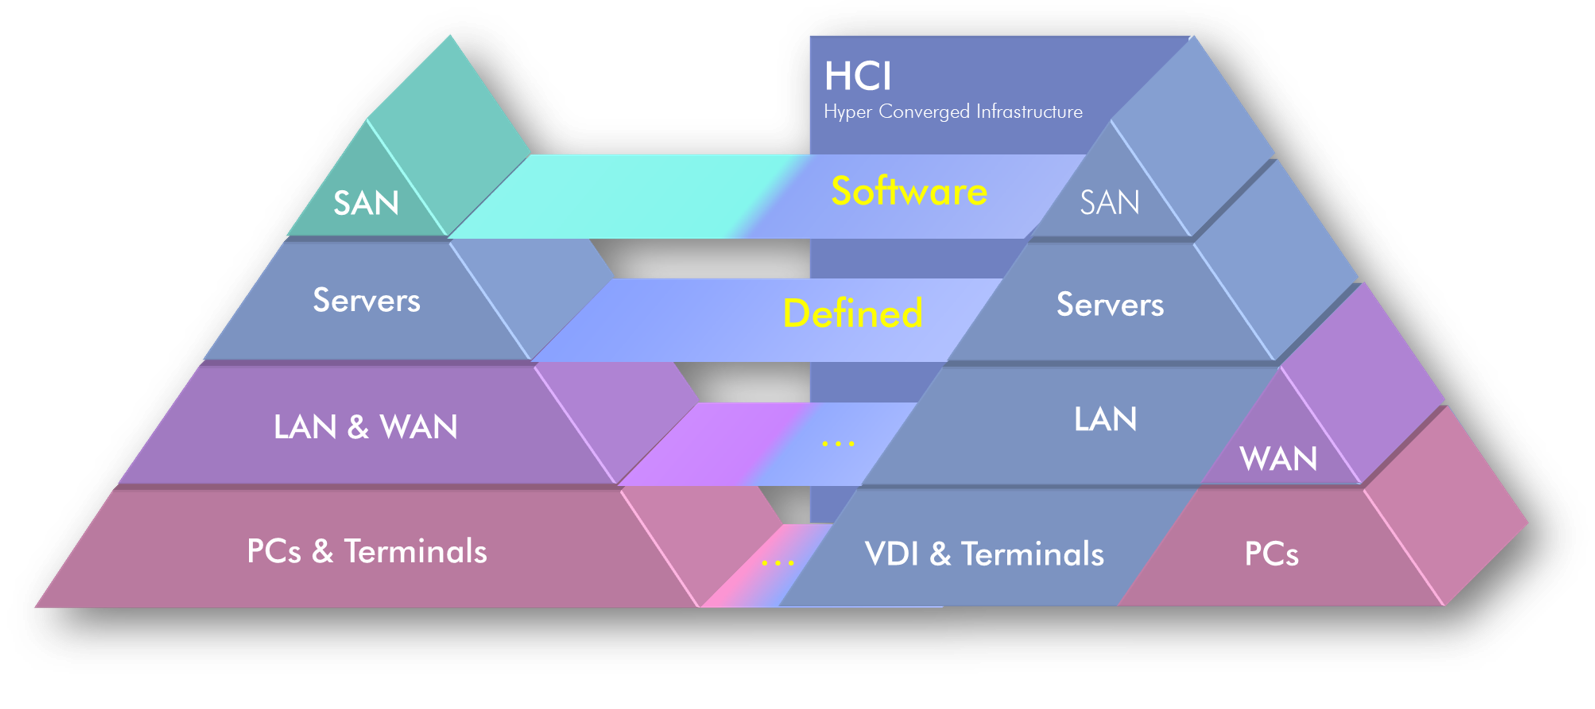 HCI - Hyper Converged Infrastructure